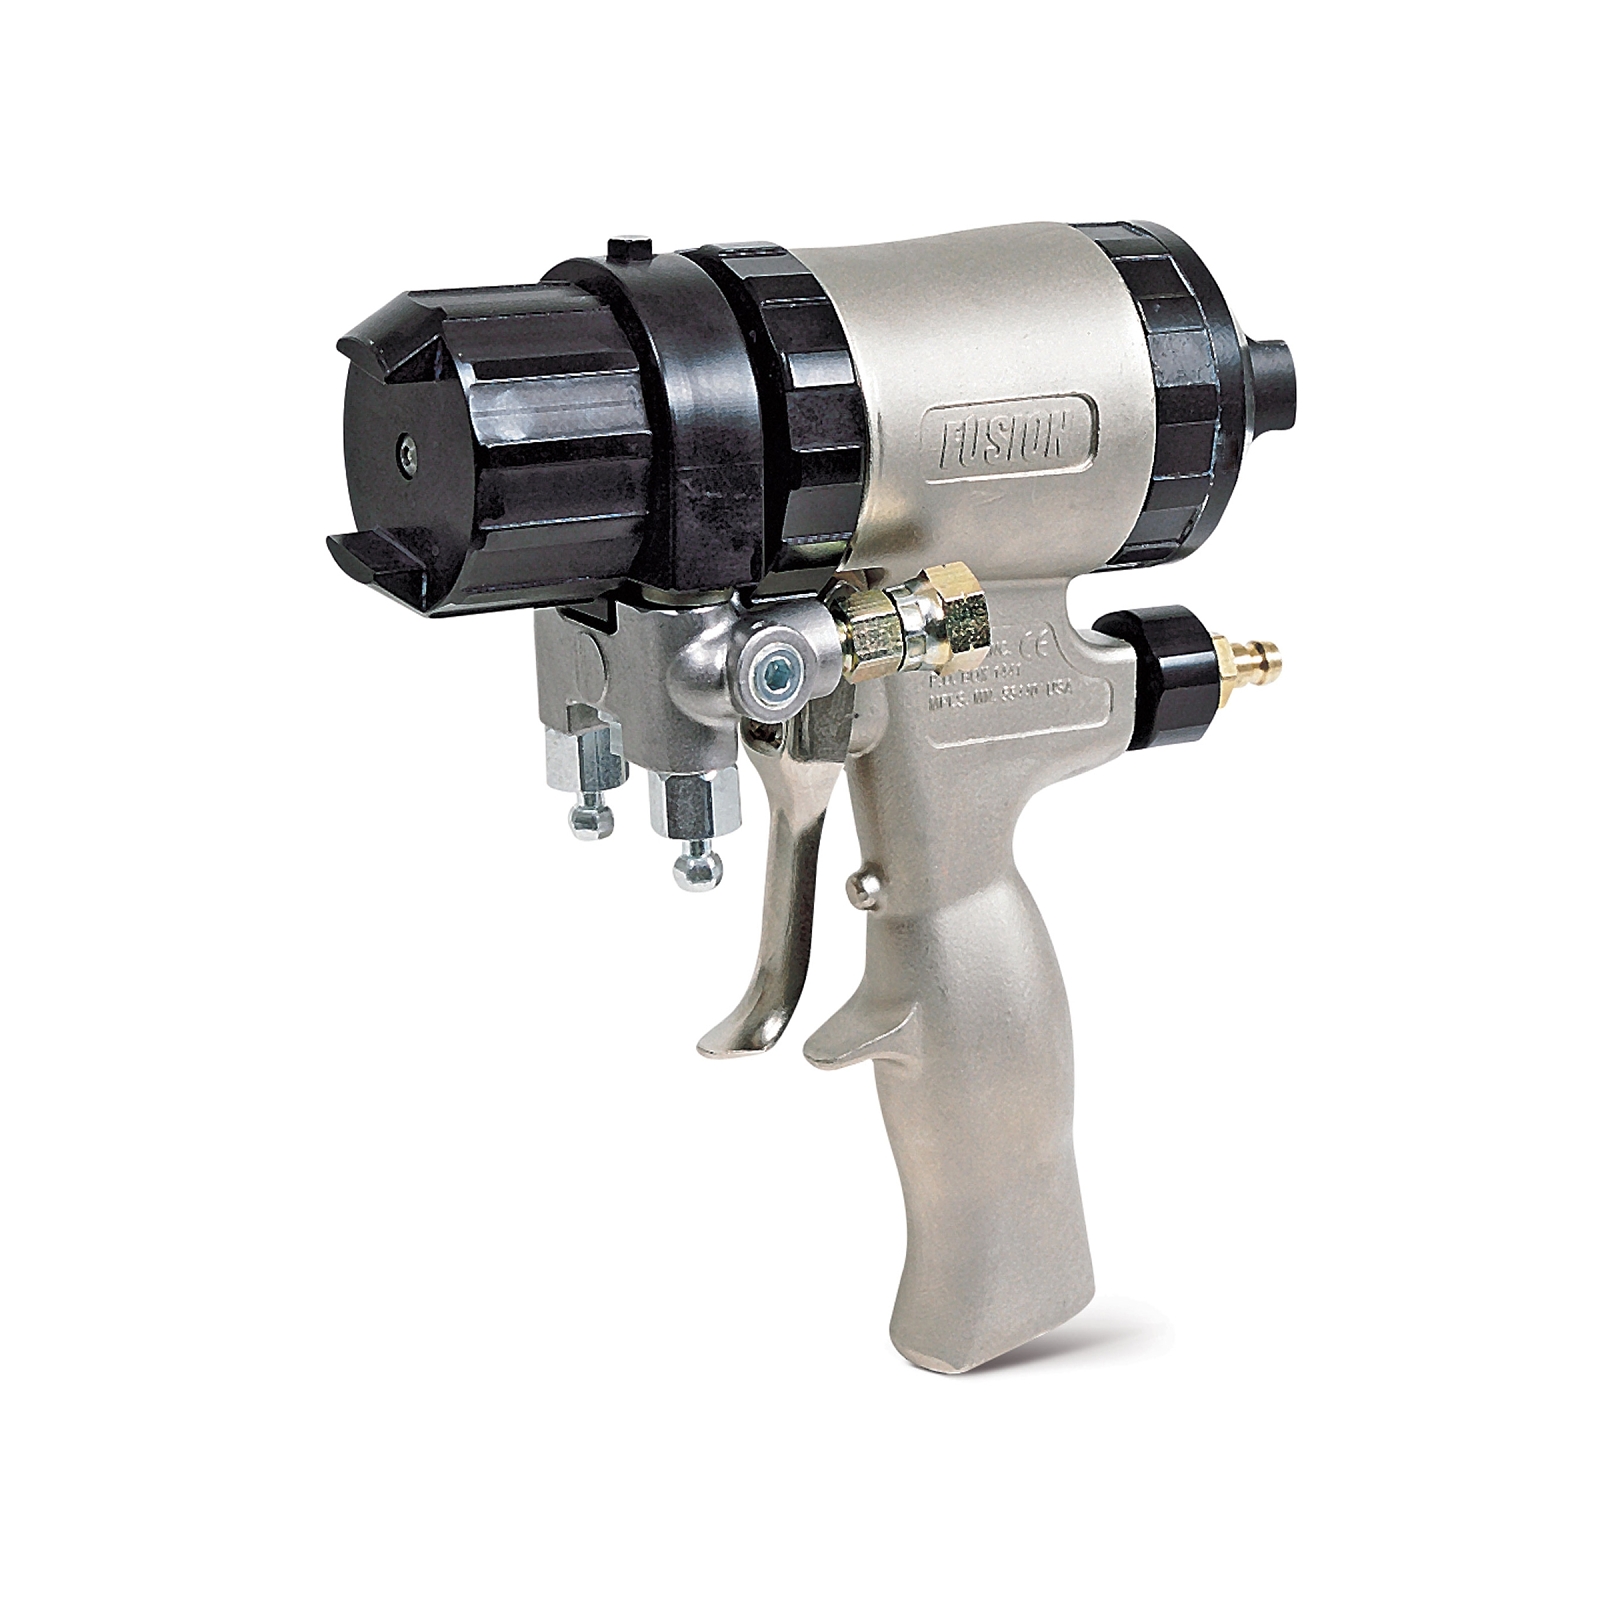 Original Graco Fusion Air Purge Gun Nozzle on AR5252 6 Pack 246626 Drill Bits 